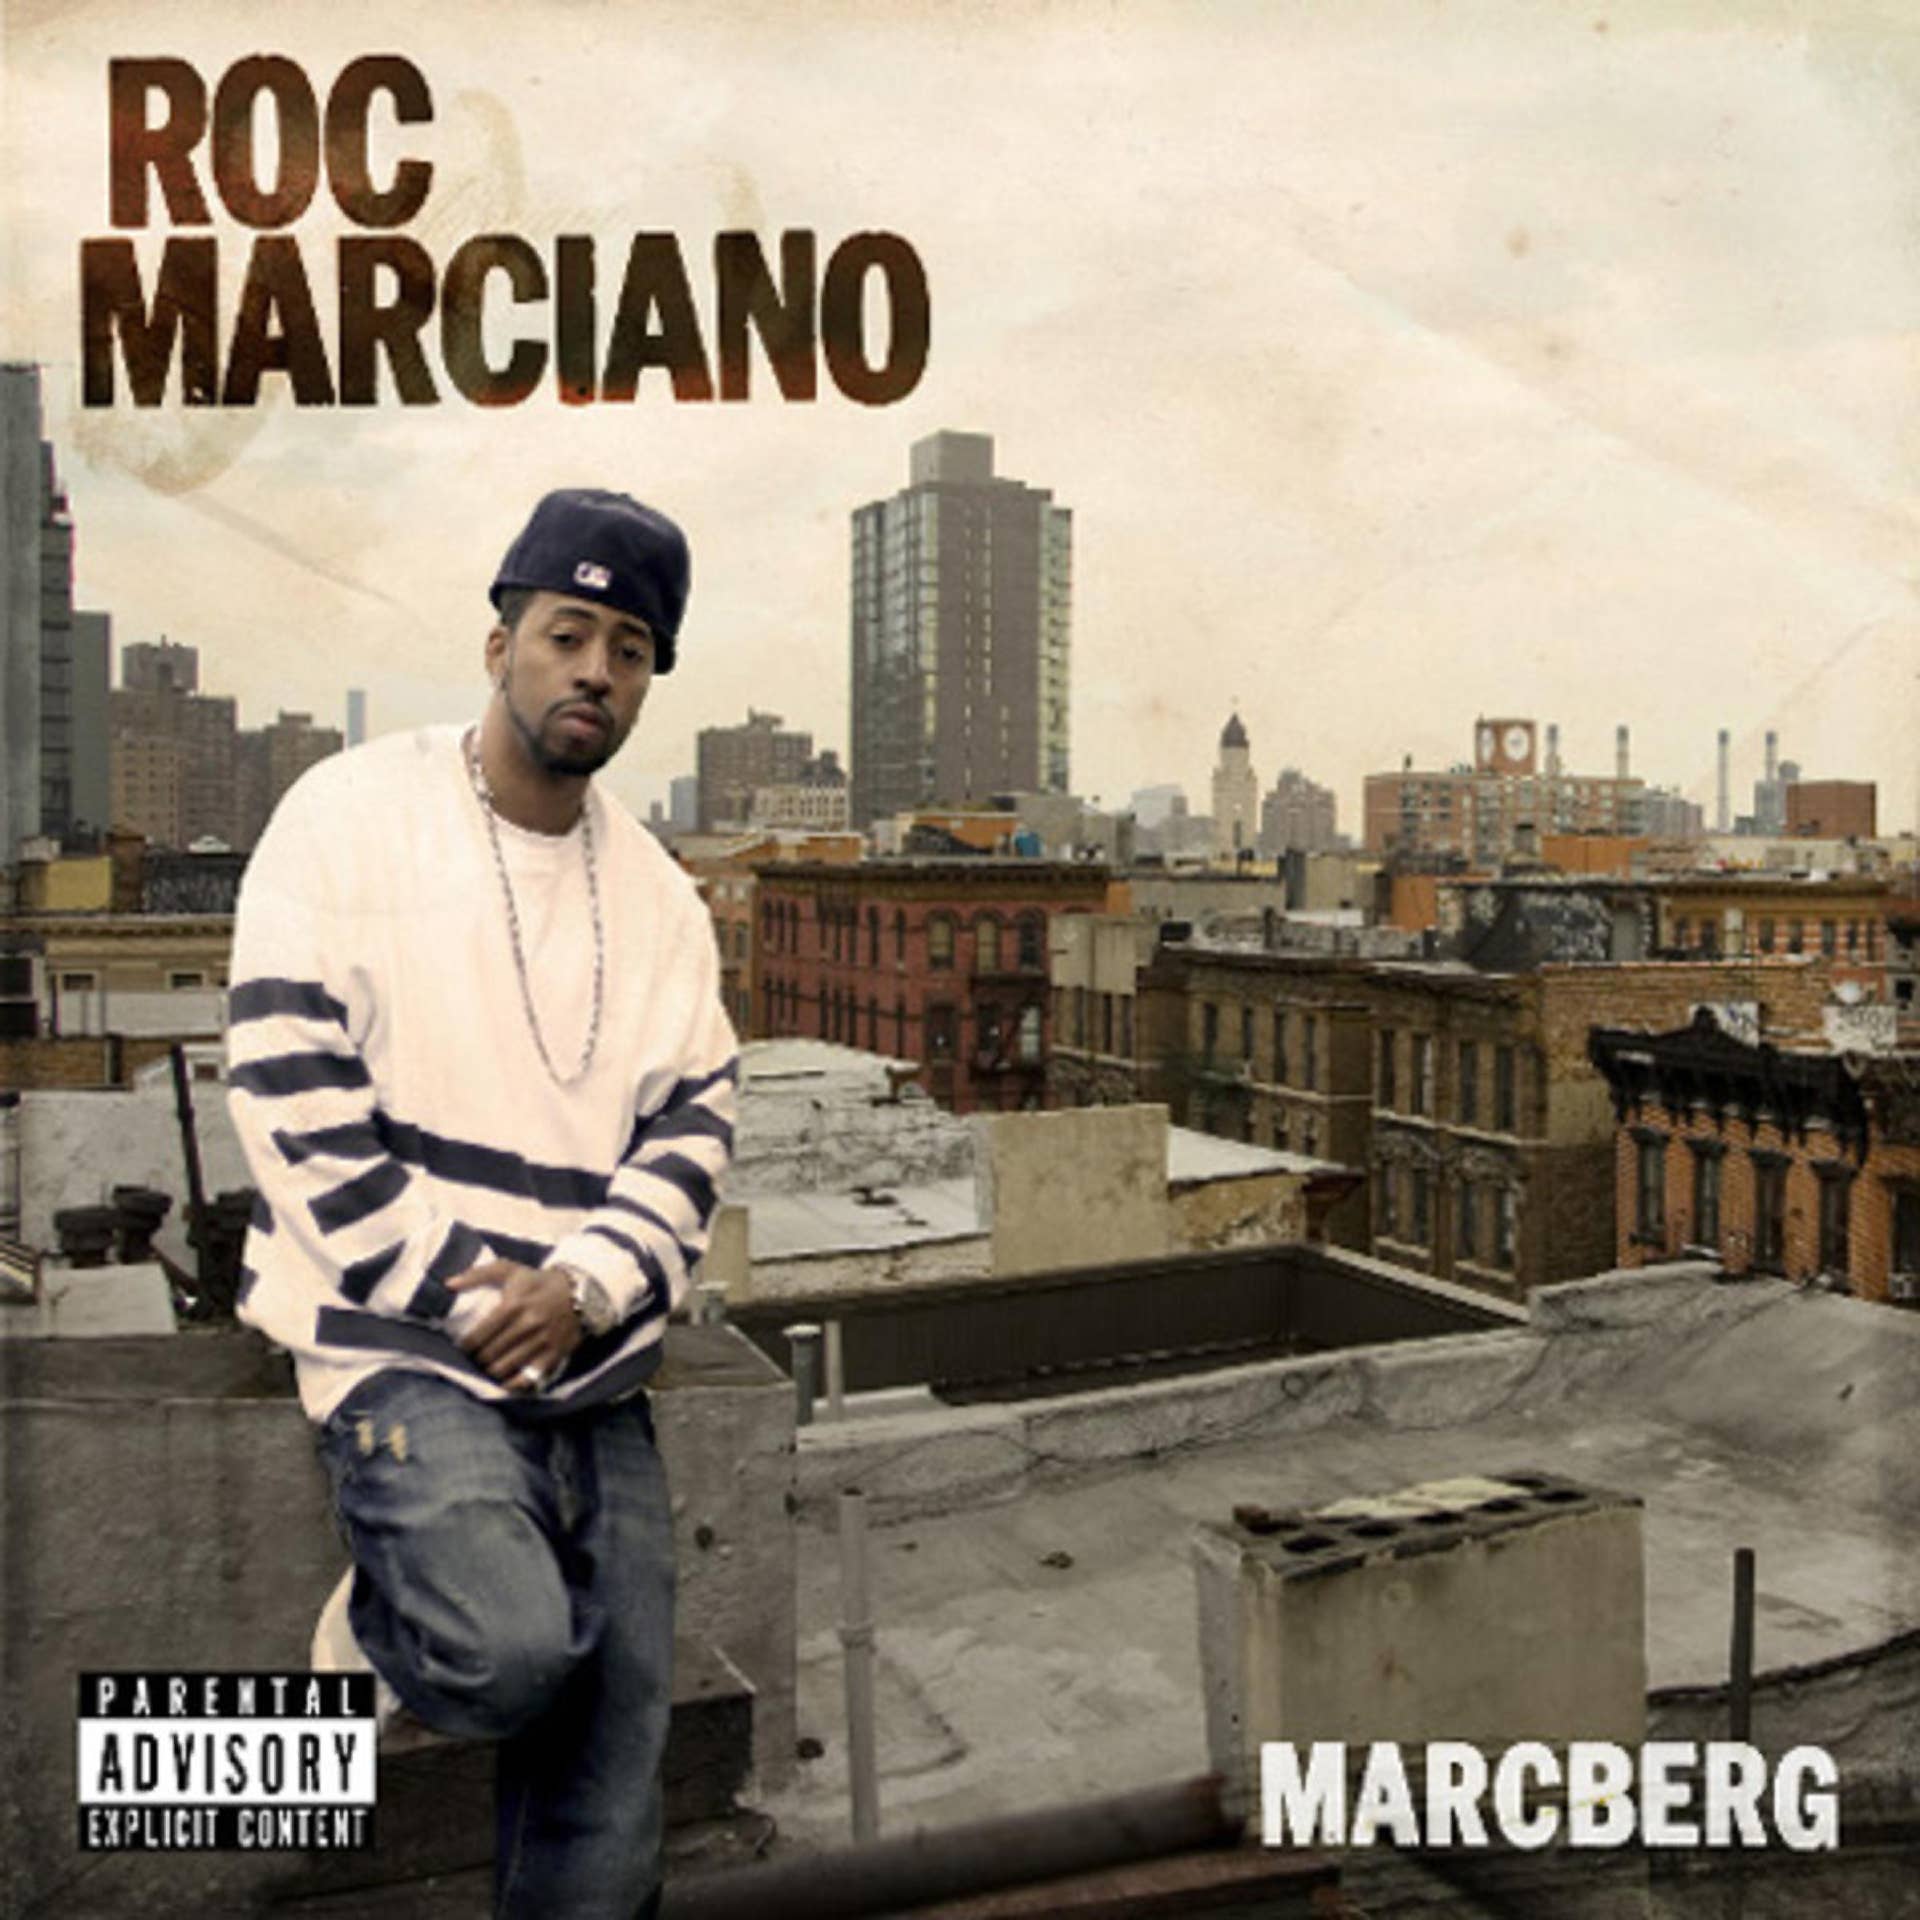 Roc Marciano 'Marcberg'